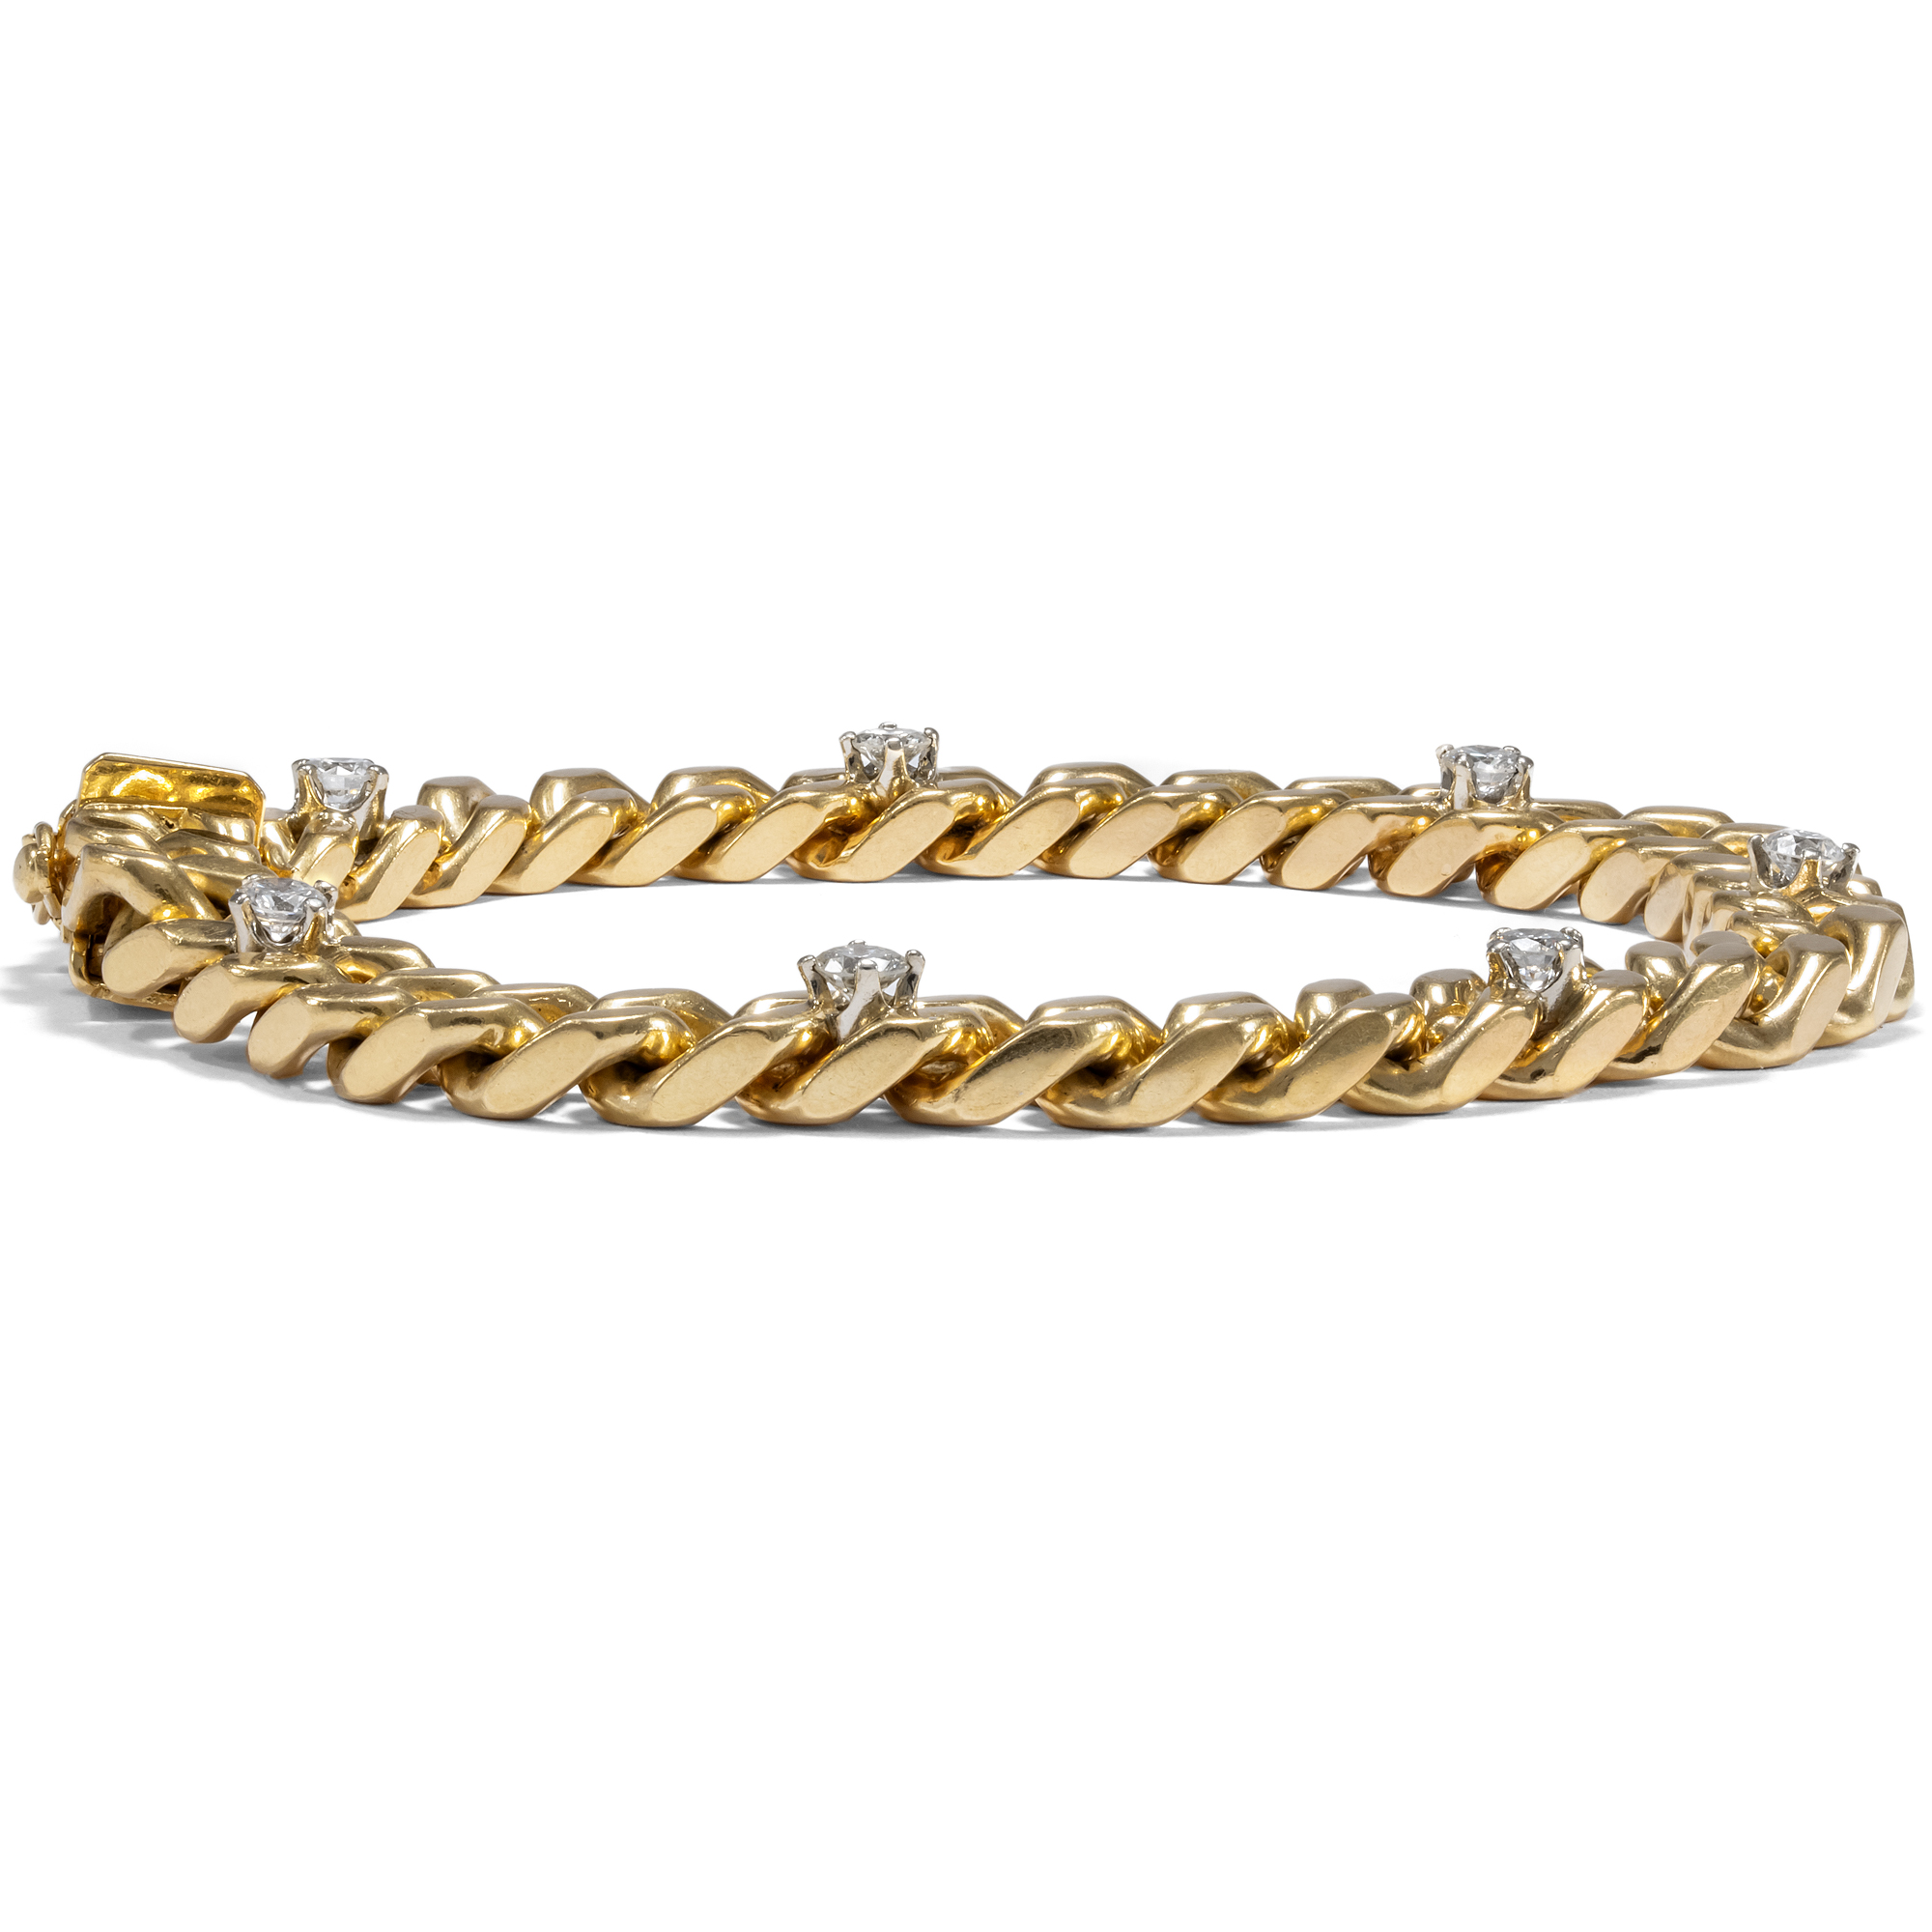 Luxuriöses Armband aus hochkarätigem Gold & Diamanten, Italien um 1960